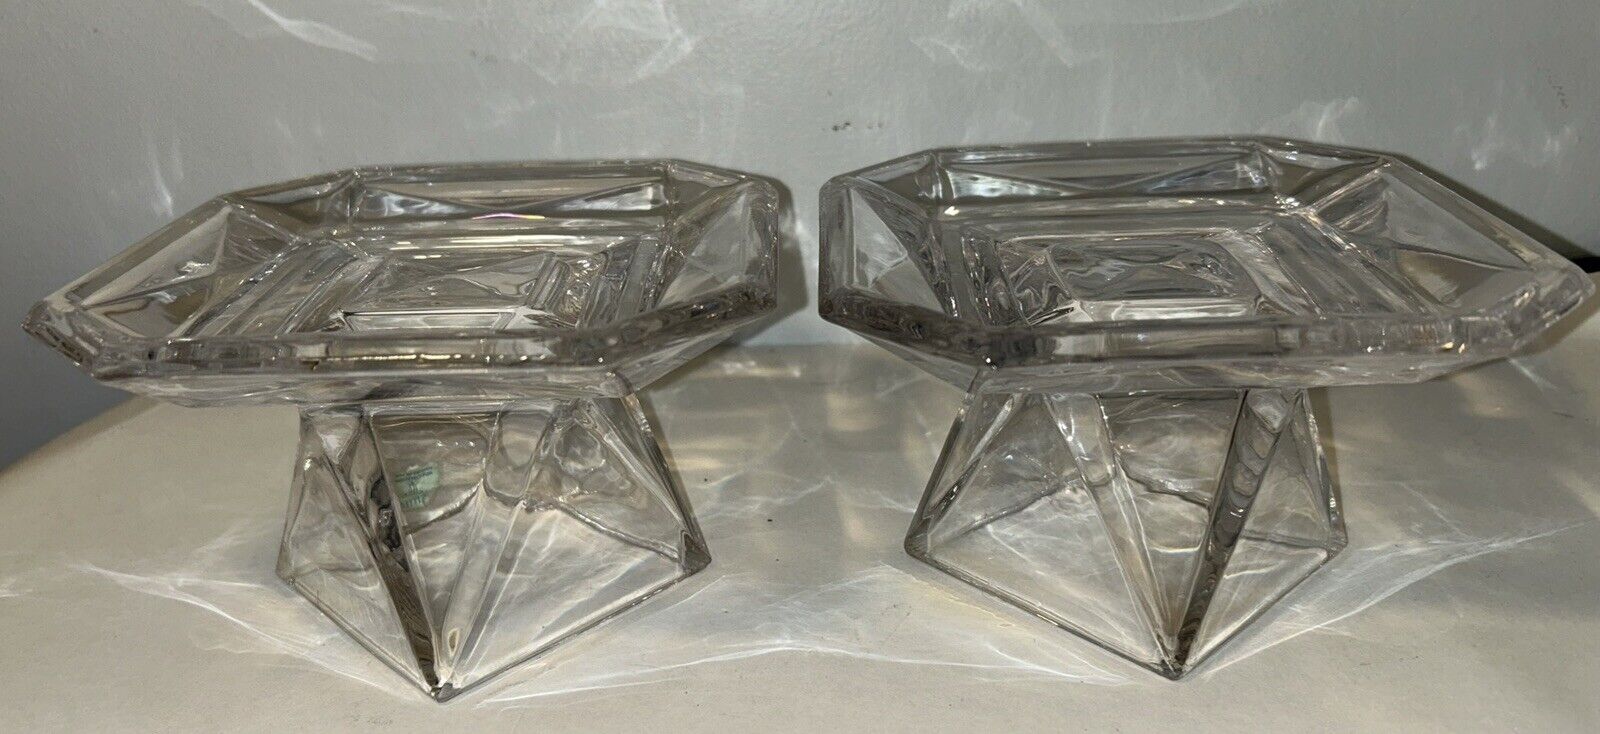 2 PartyLite Iridescent Reversible Quad Prism Pedestal Candle Holder